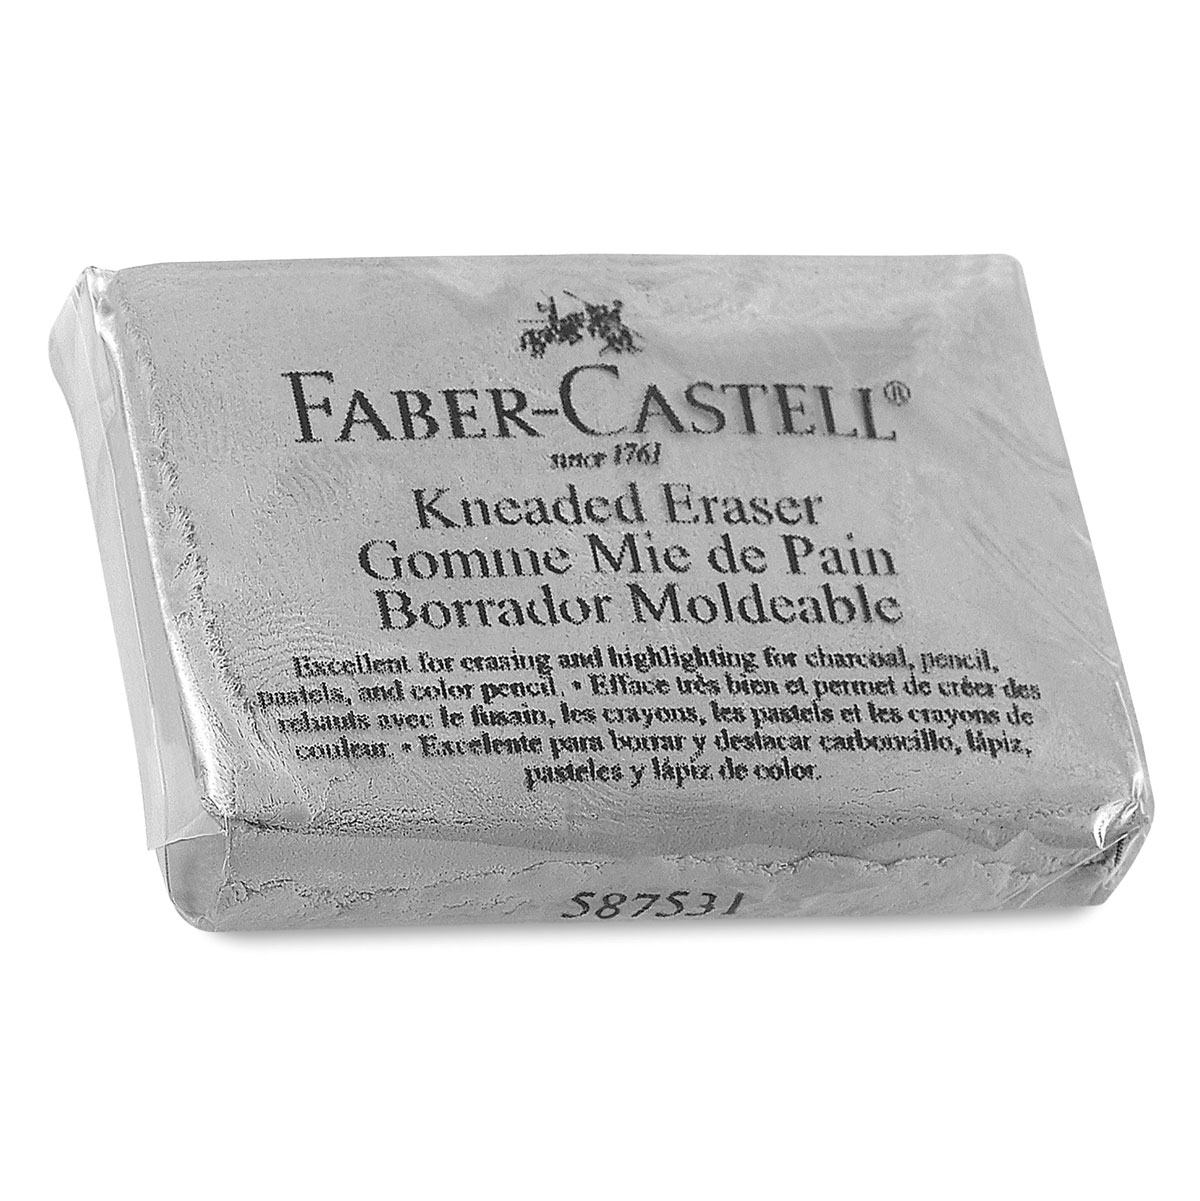 Faber-Castell Large Kneaded Art Eraser Grey Artist Drawing Art Pencil  Eraser with Casing [Pack of 4] + 1 Faber-Castell Sharpener